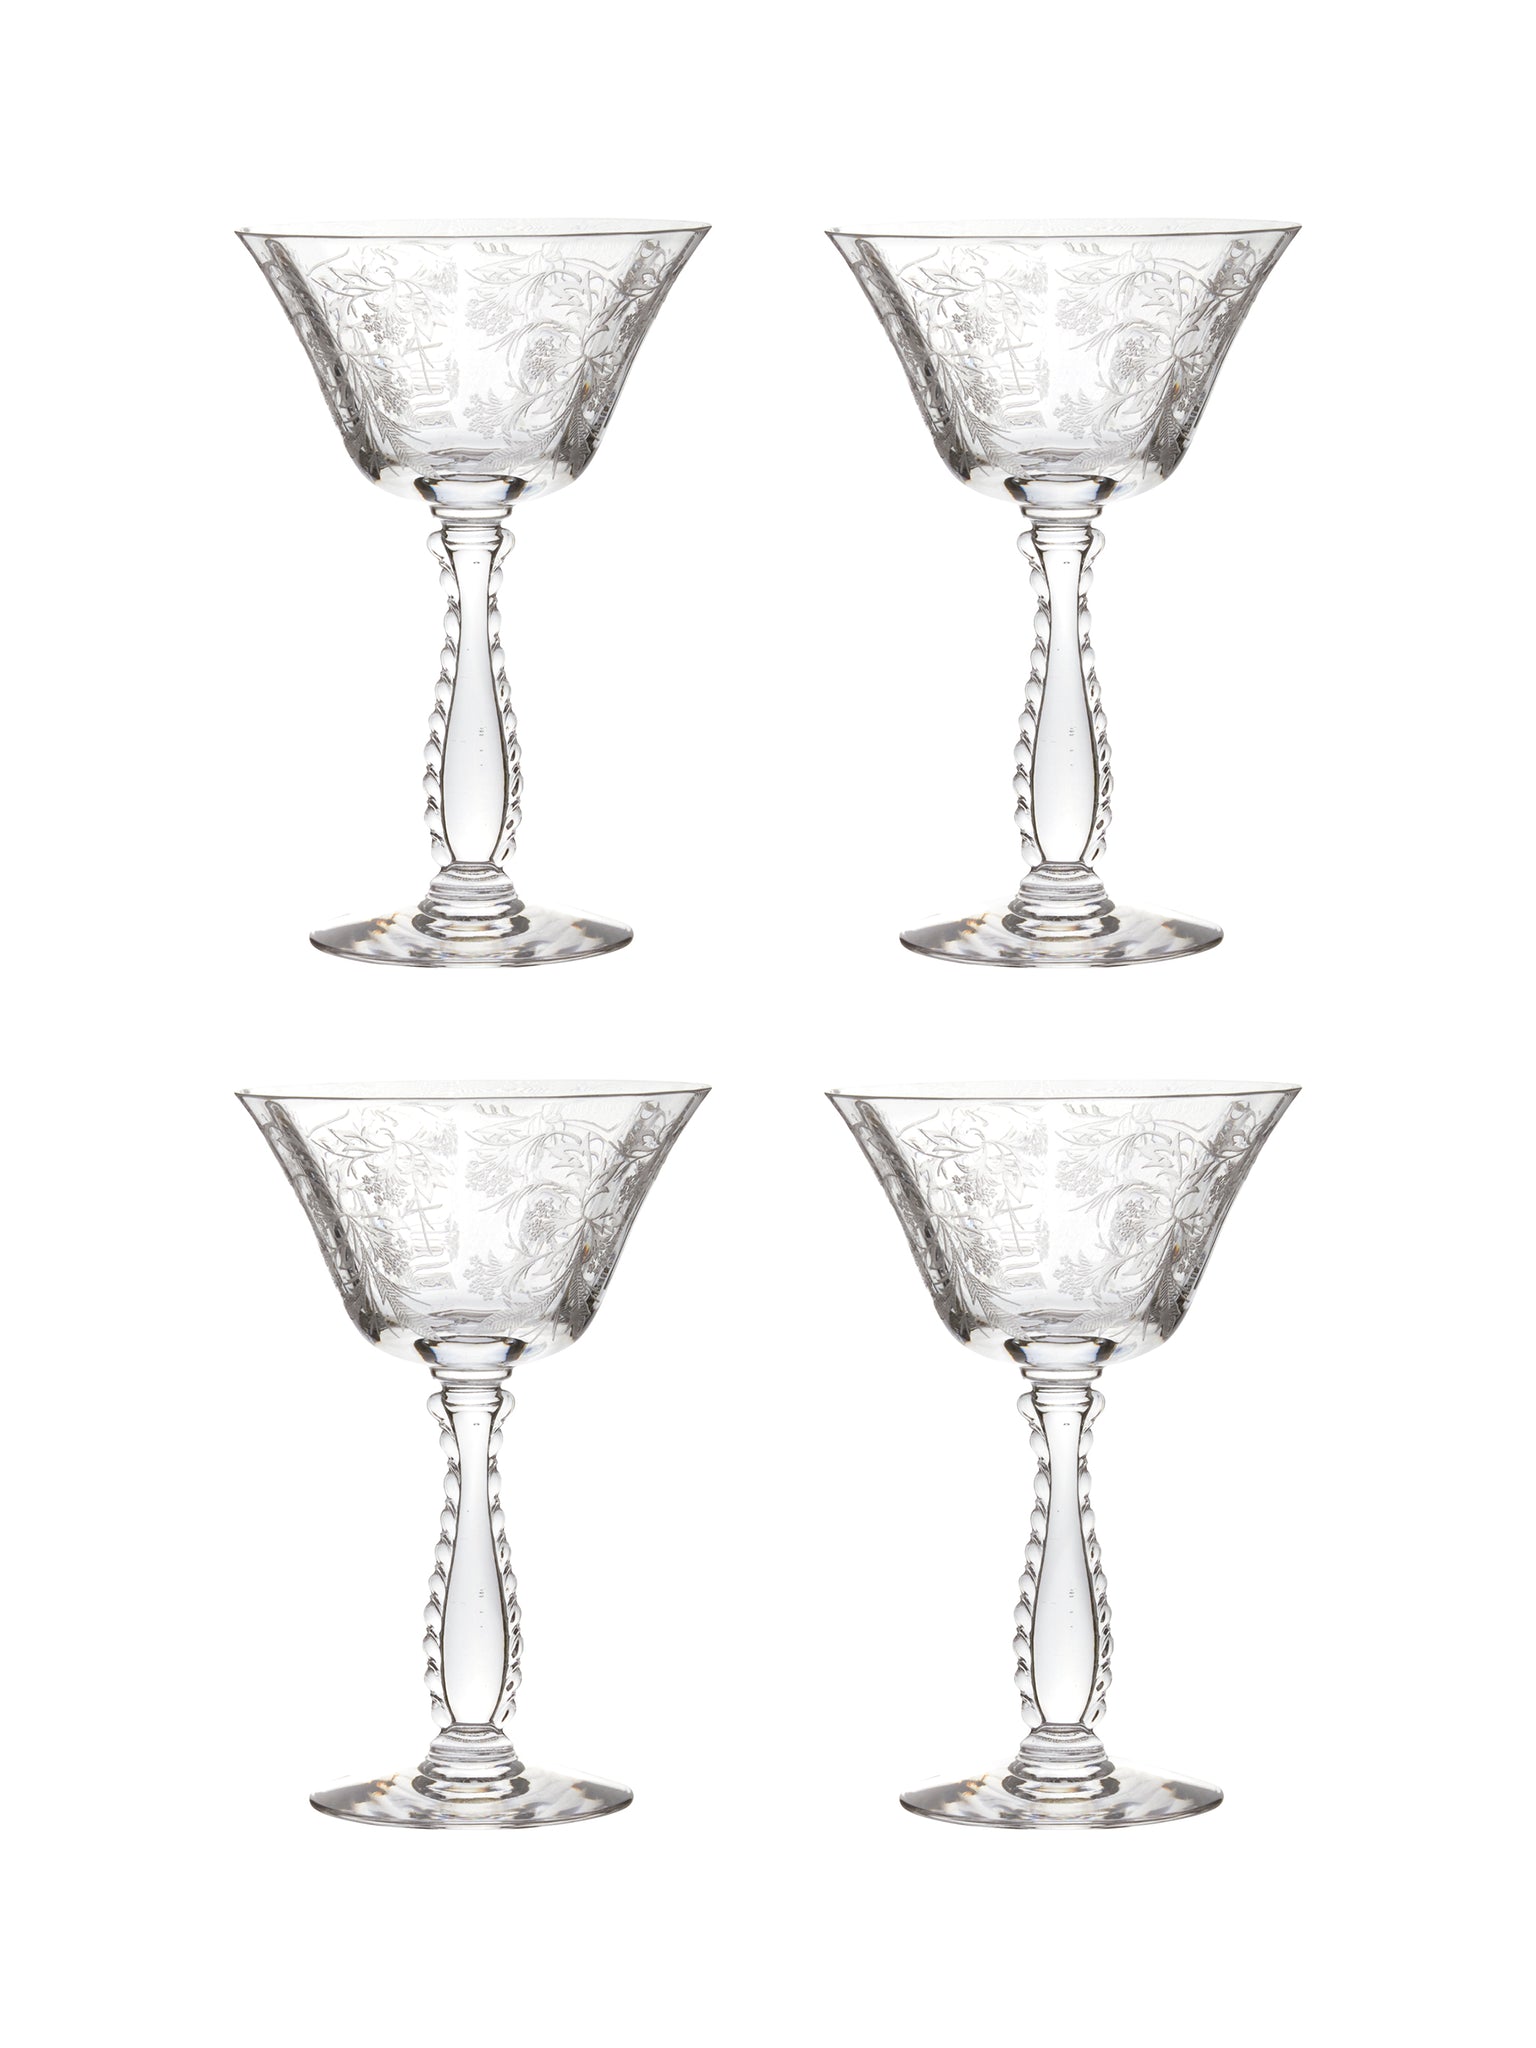 Vintage 1950s Fostoria Heather Champagne Glasses Set of Four Weston Table